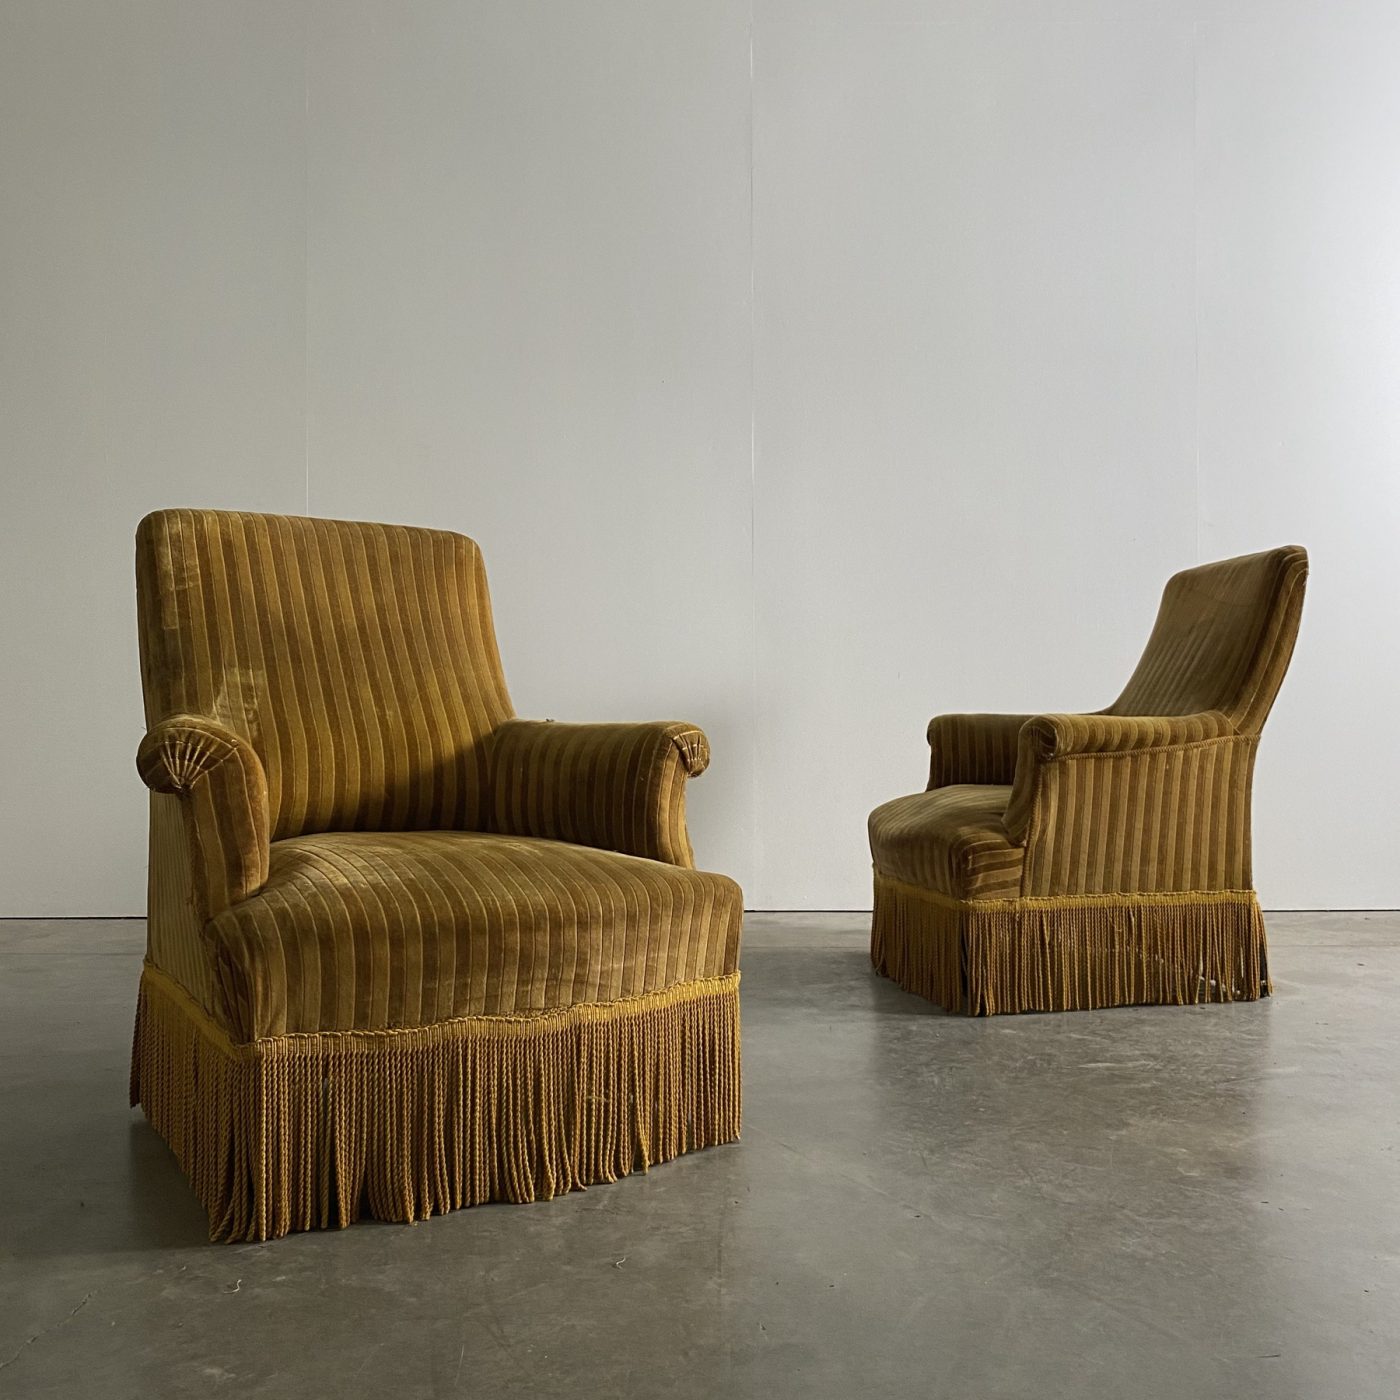 objet-vagabond-napoleon-chairs0004